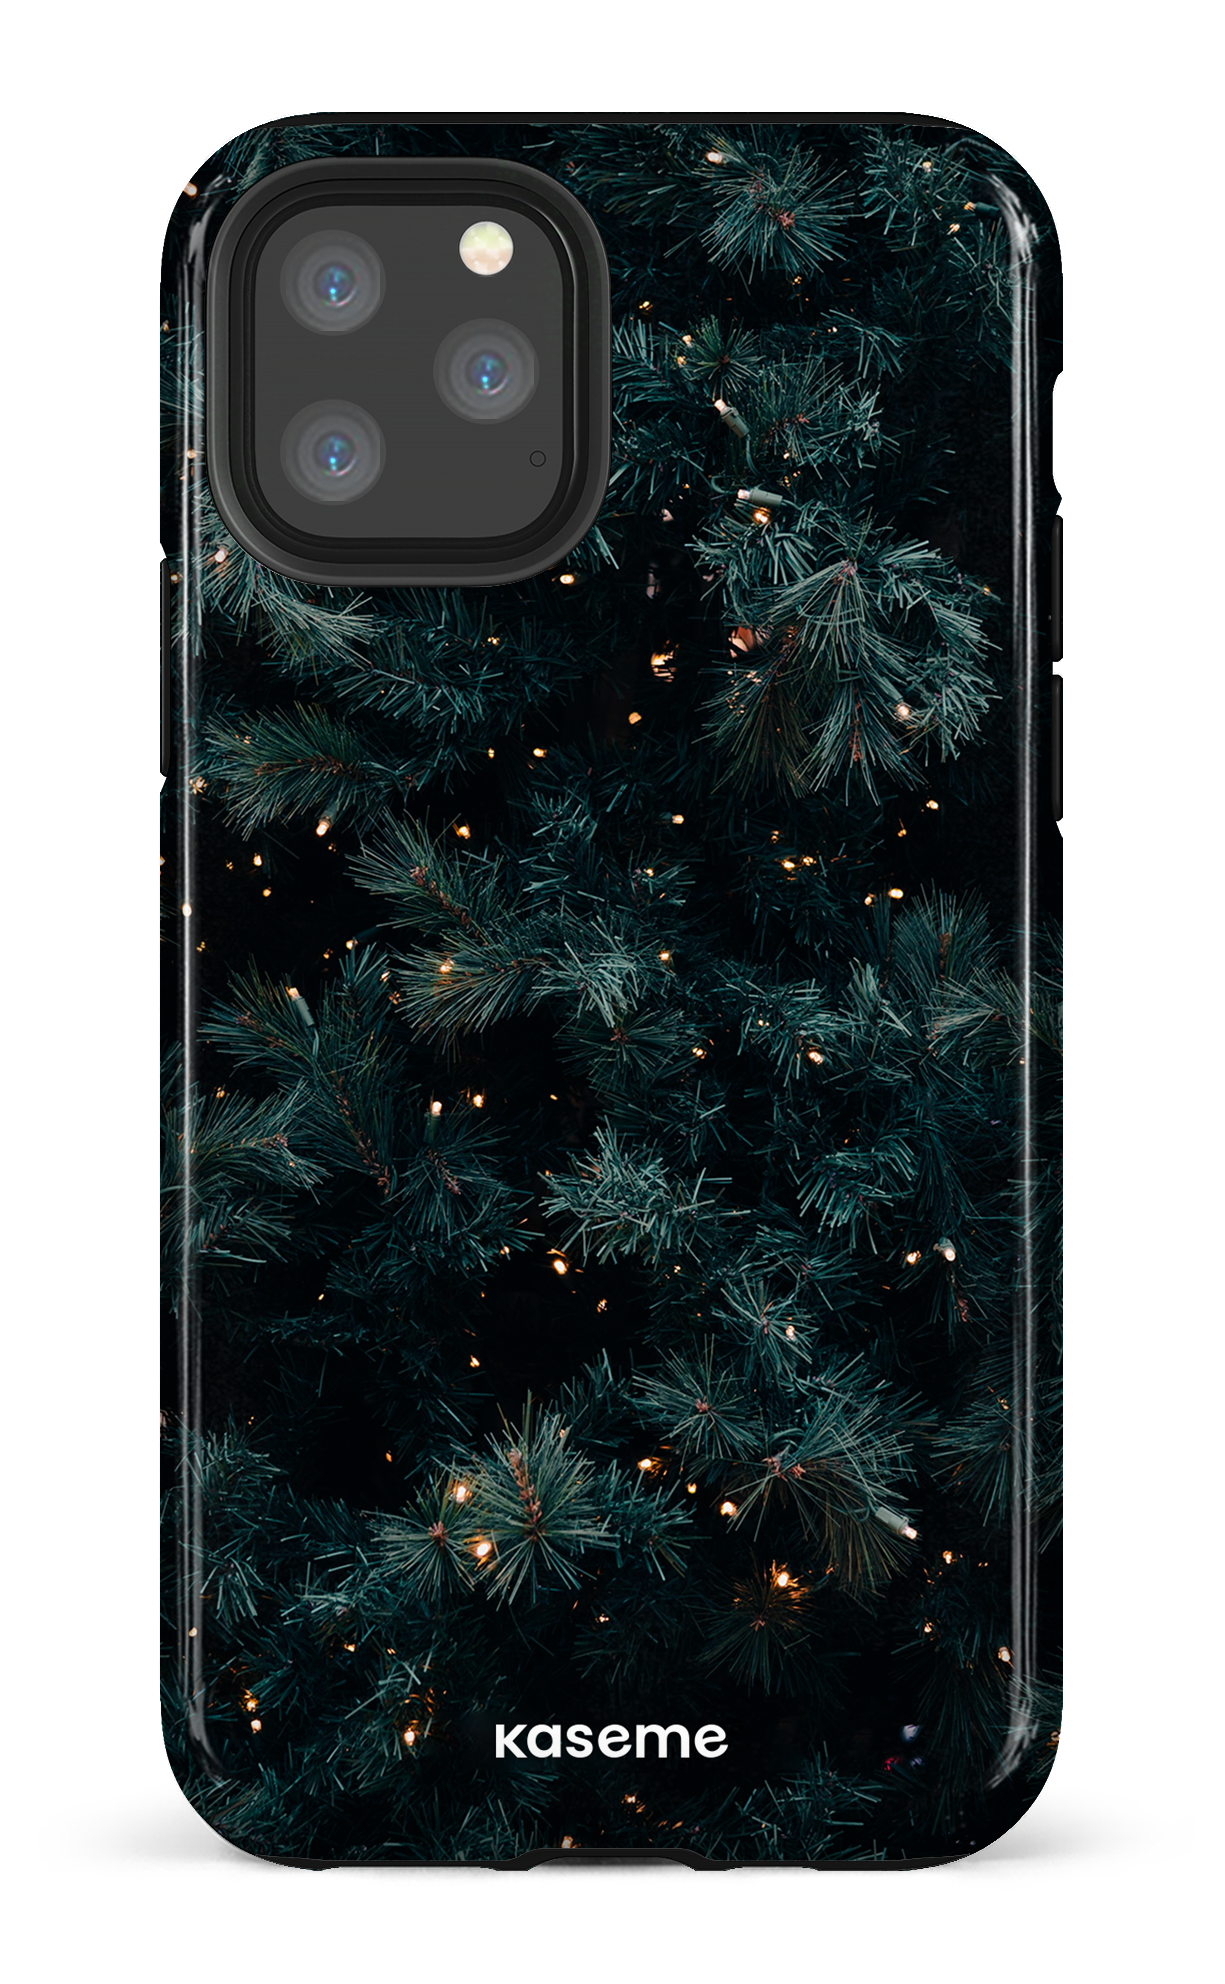 Holidays - iPhone 11 Pro